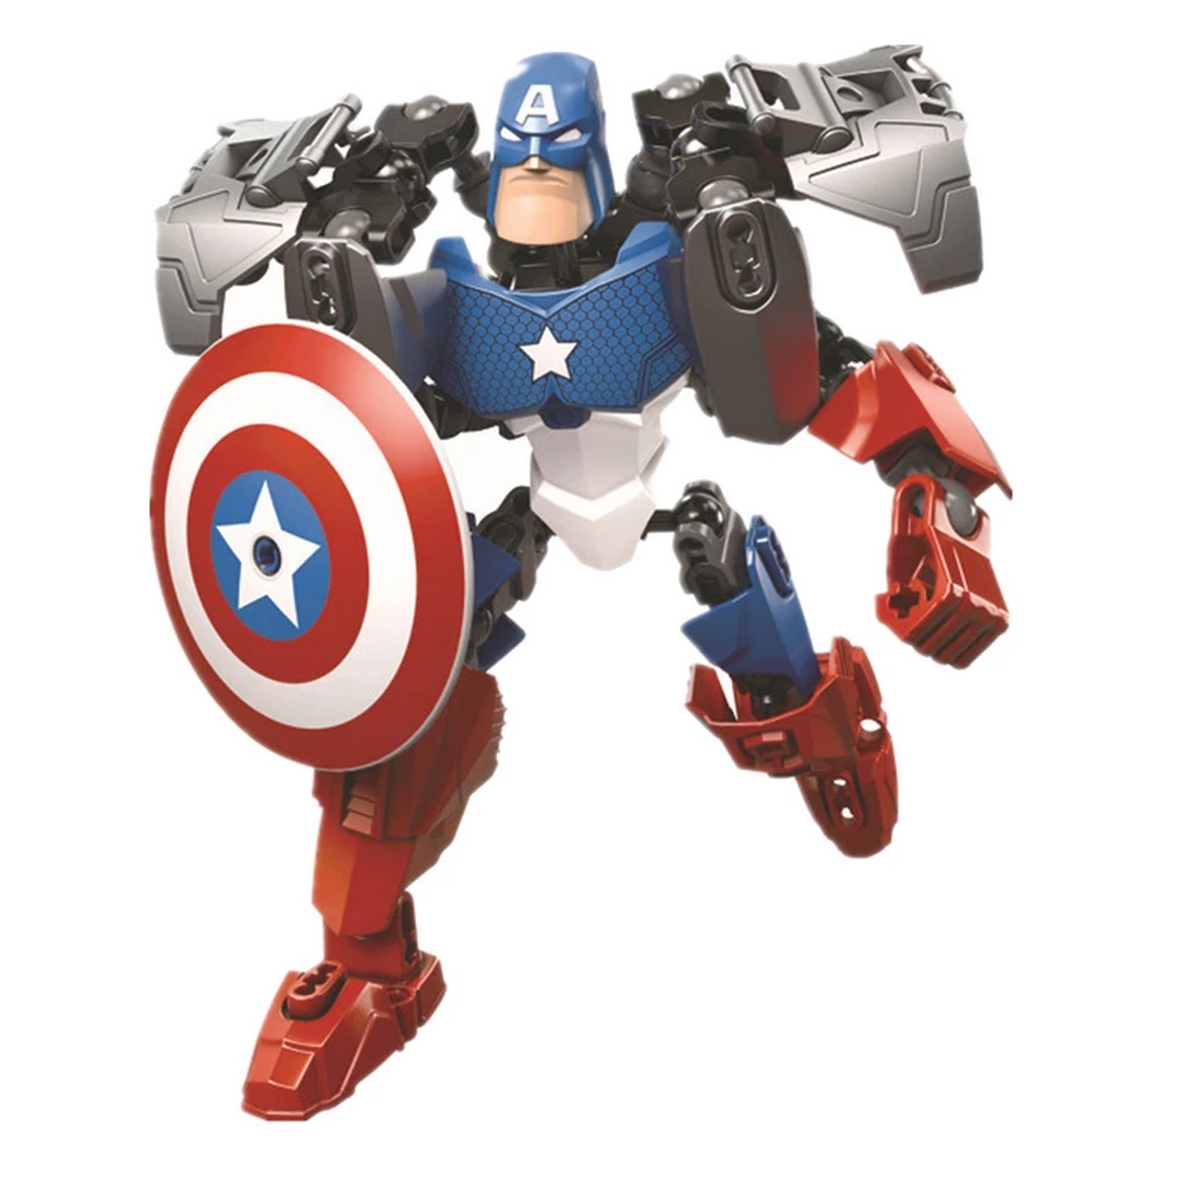 Figura De Acción Capitan America Armable Juguete Colección